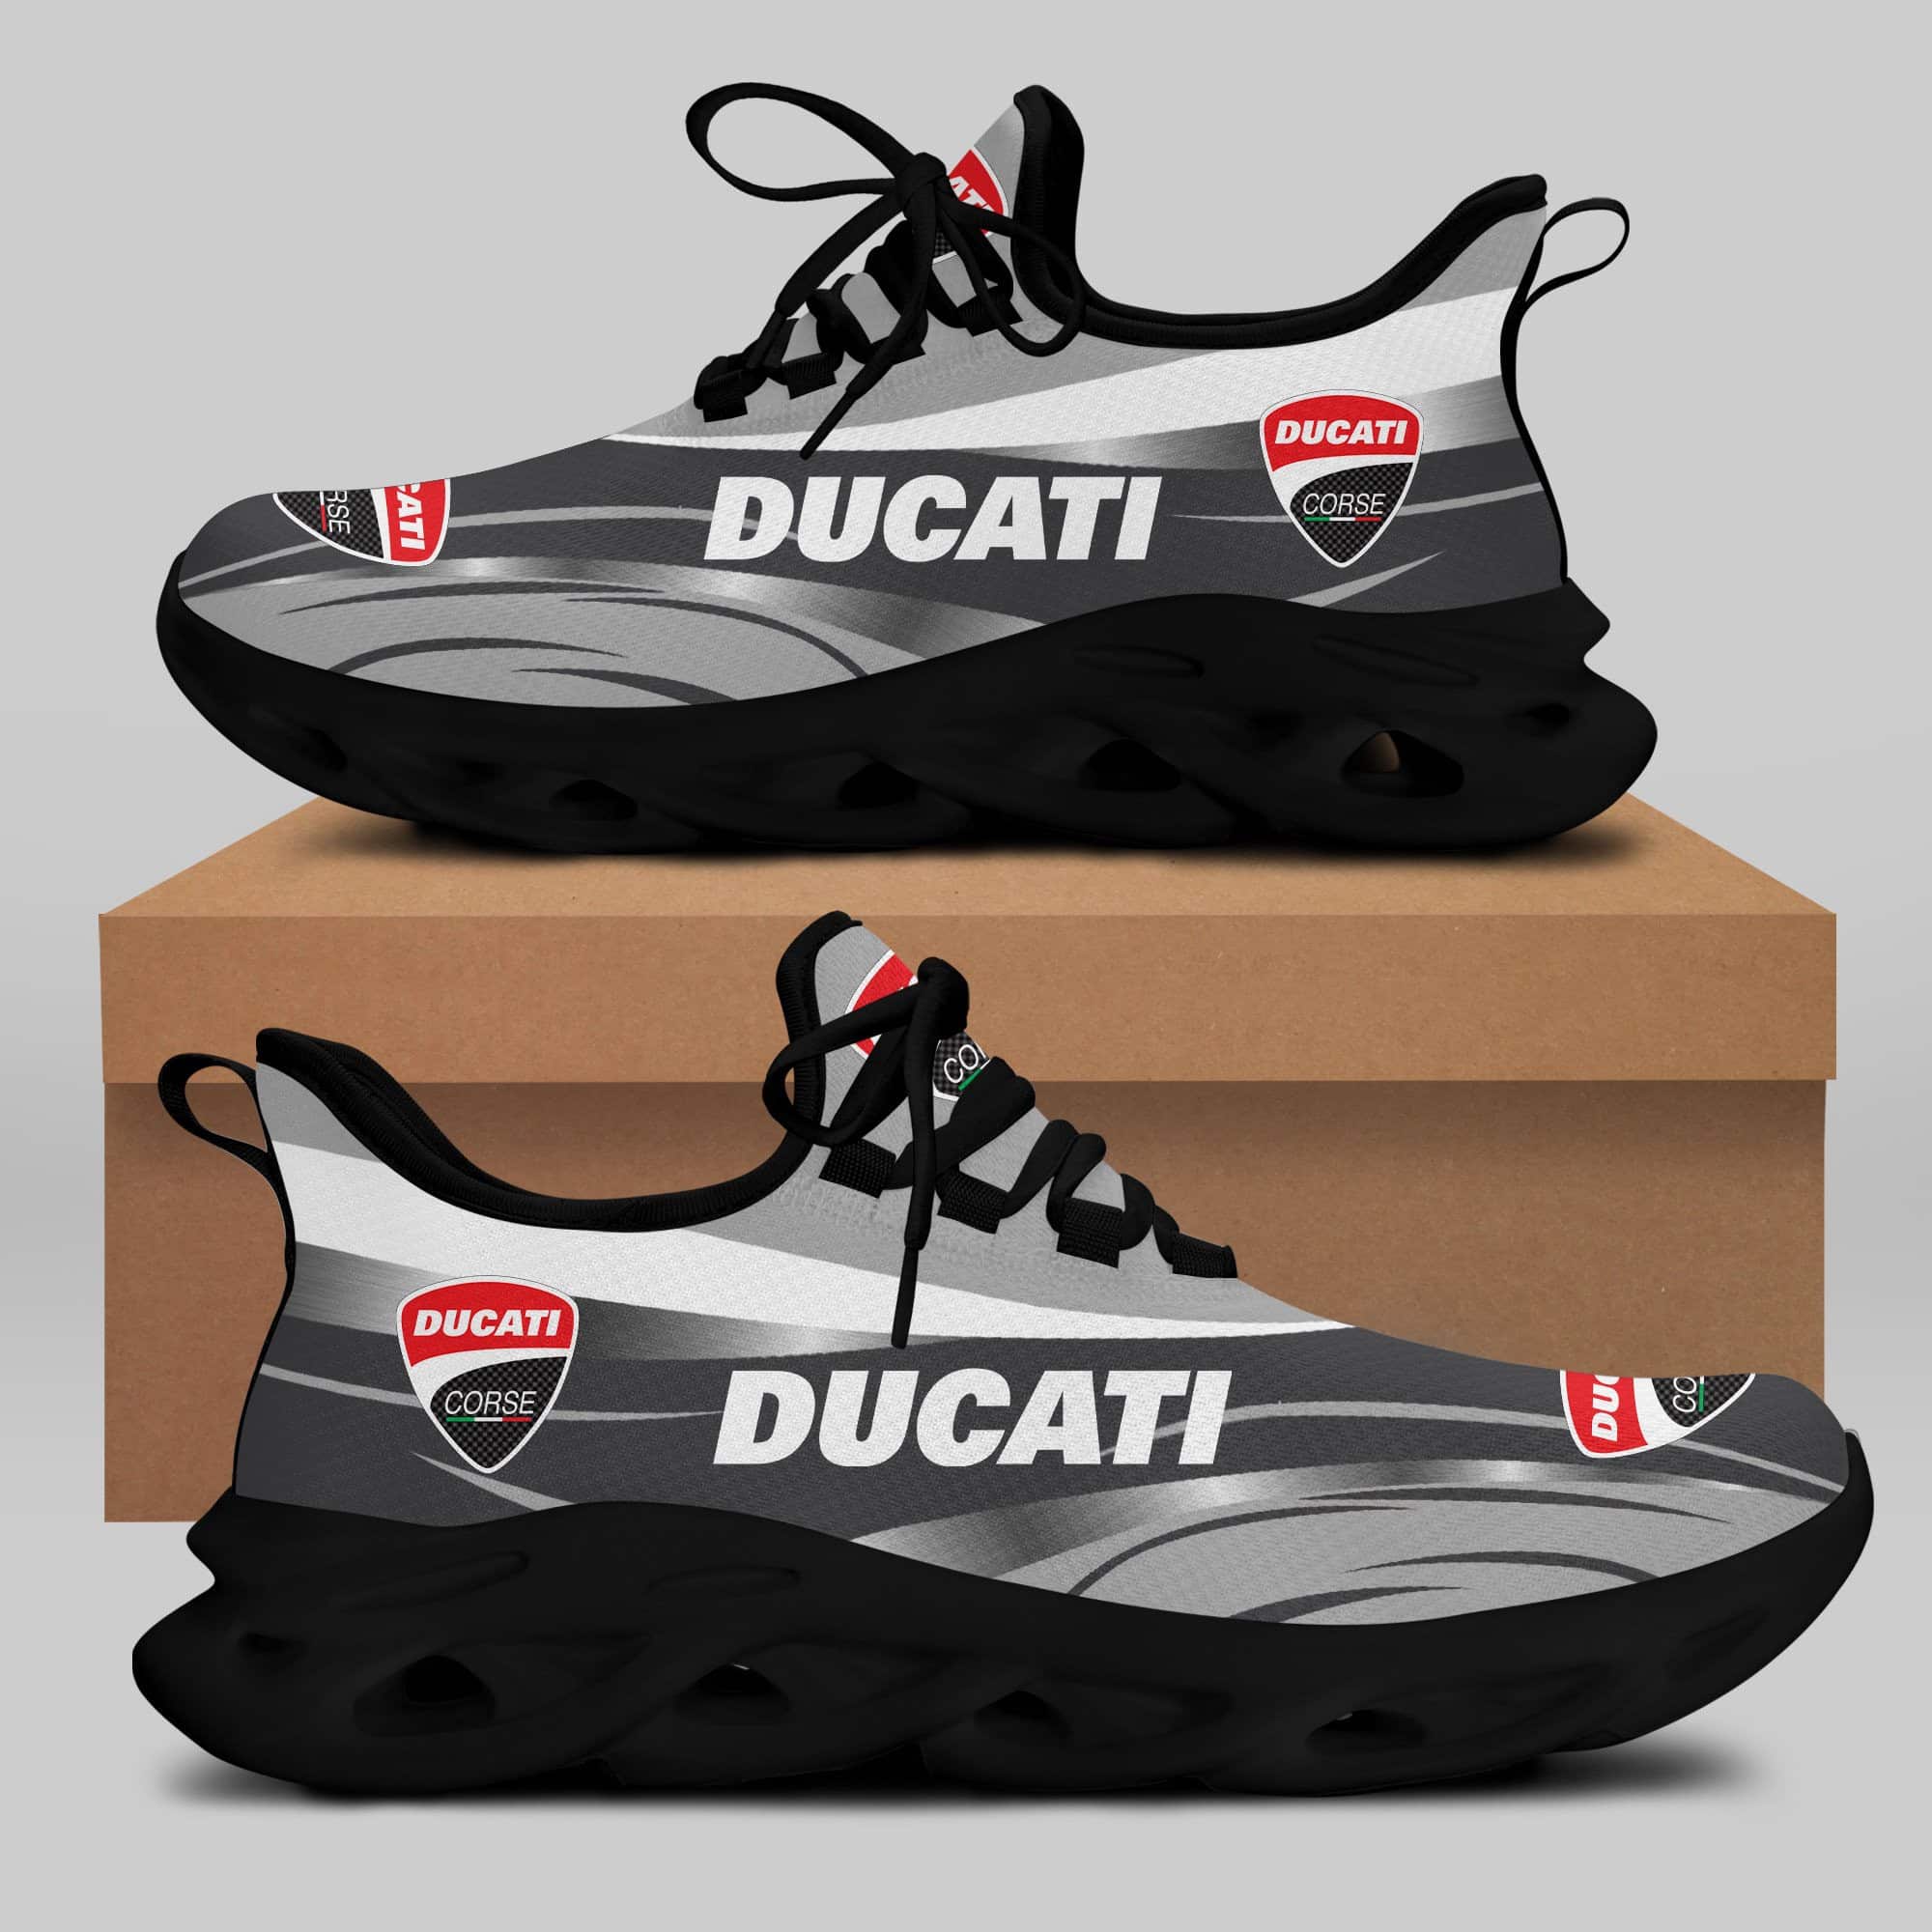 Ducati Racing Running Shoes Max Soul Shoes Sneakers Ver 56 2